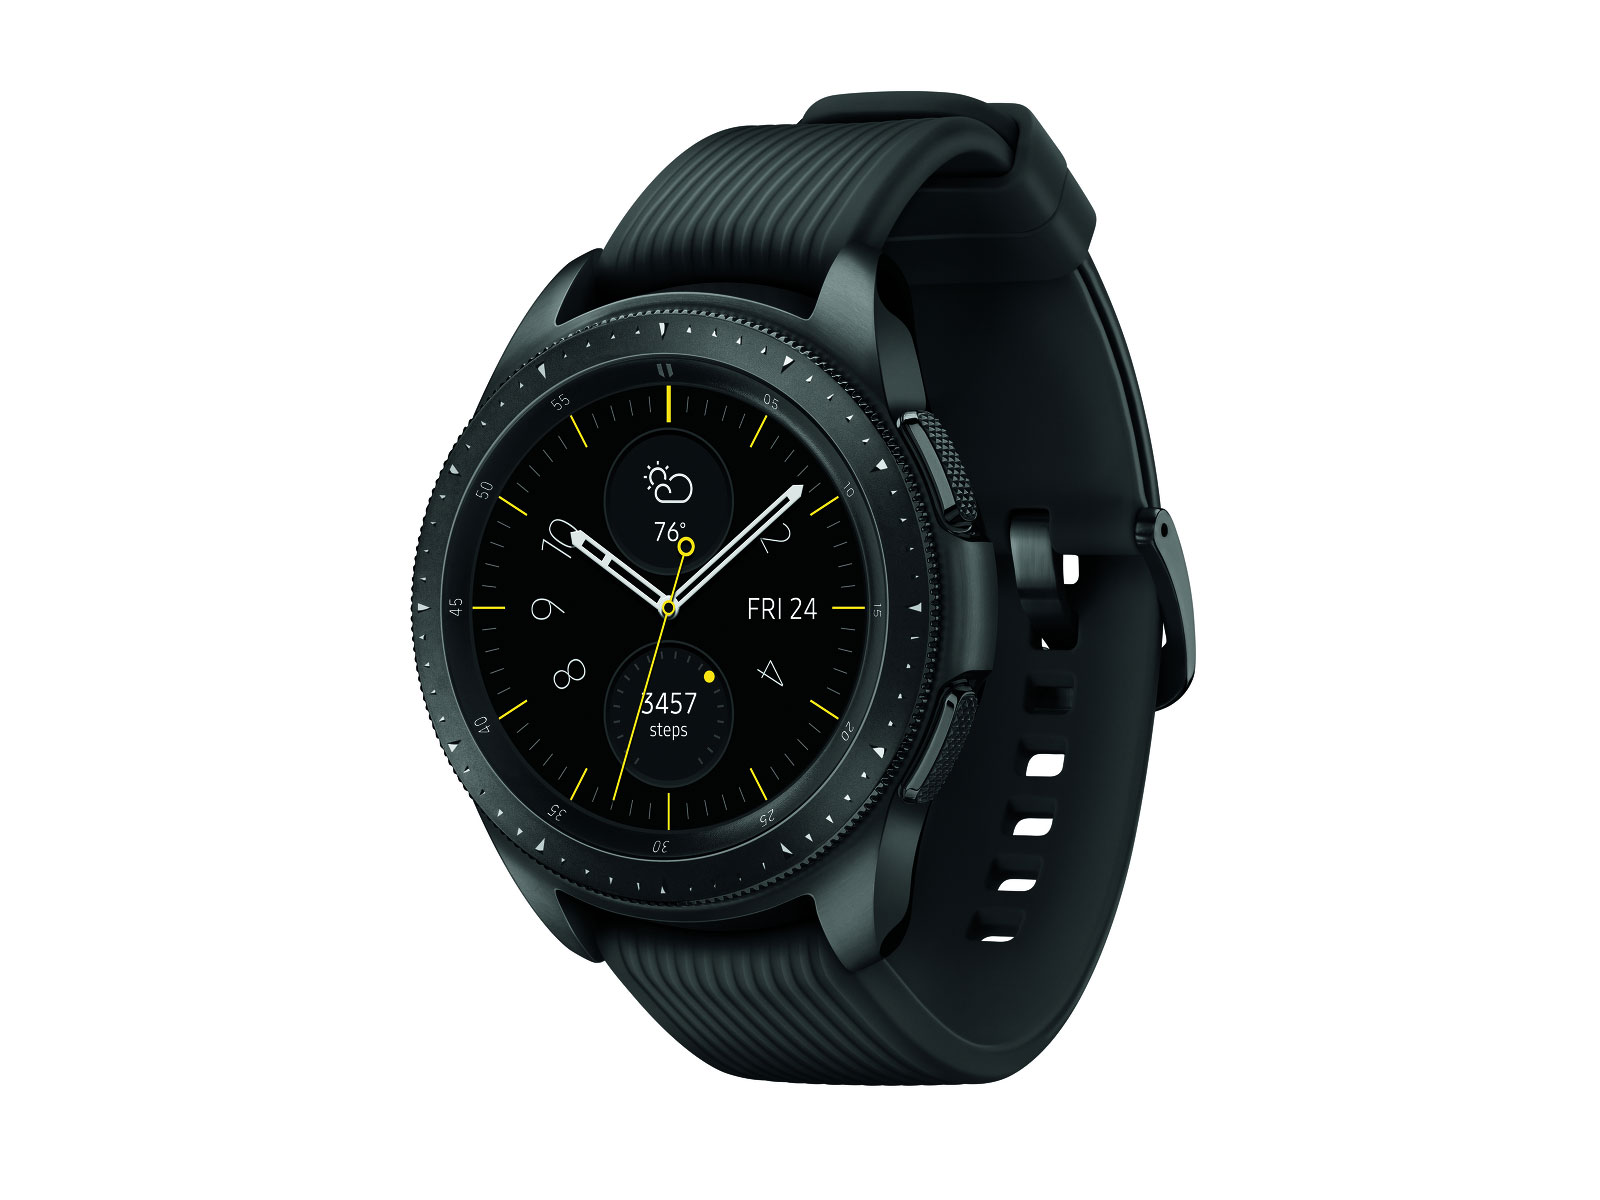 Midnight Black Samsung Galaxy Watch - 42mm Bluetooth | Samsung US